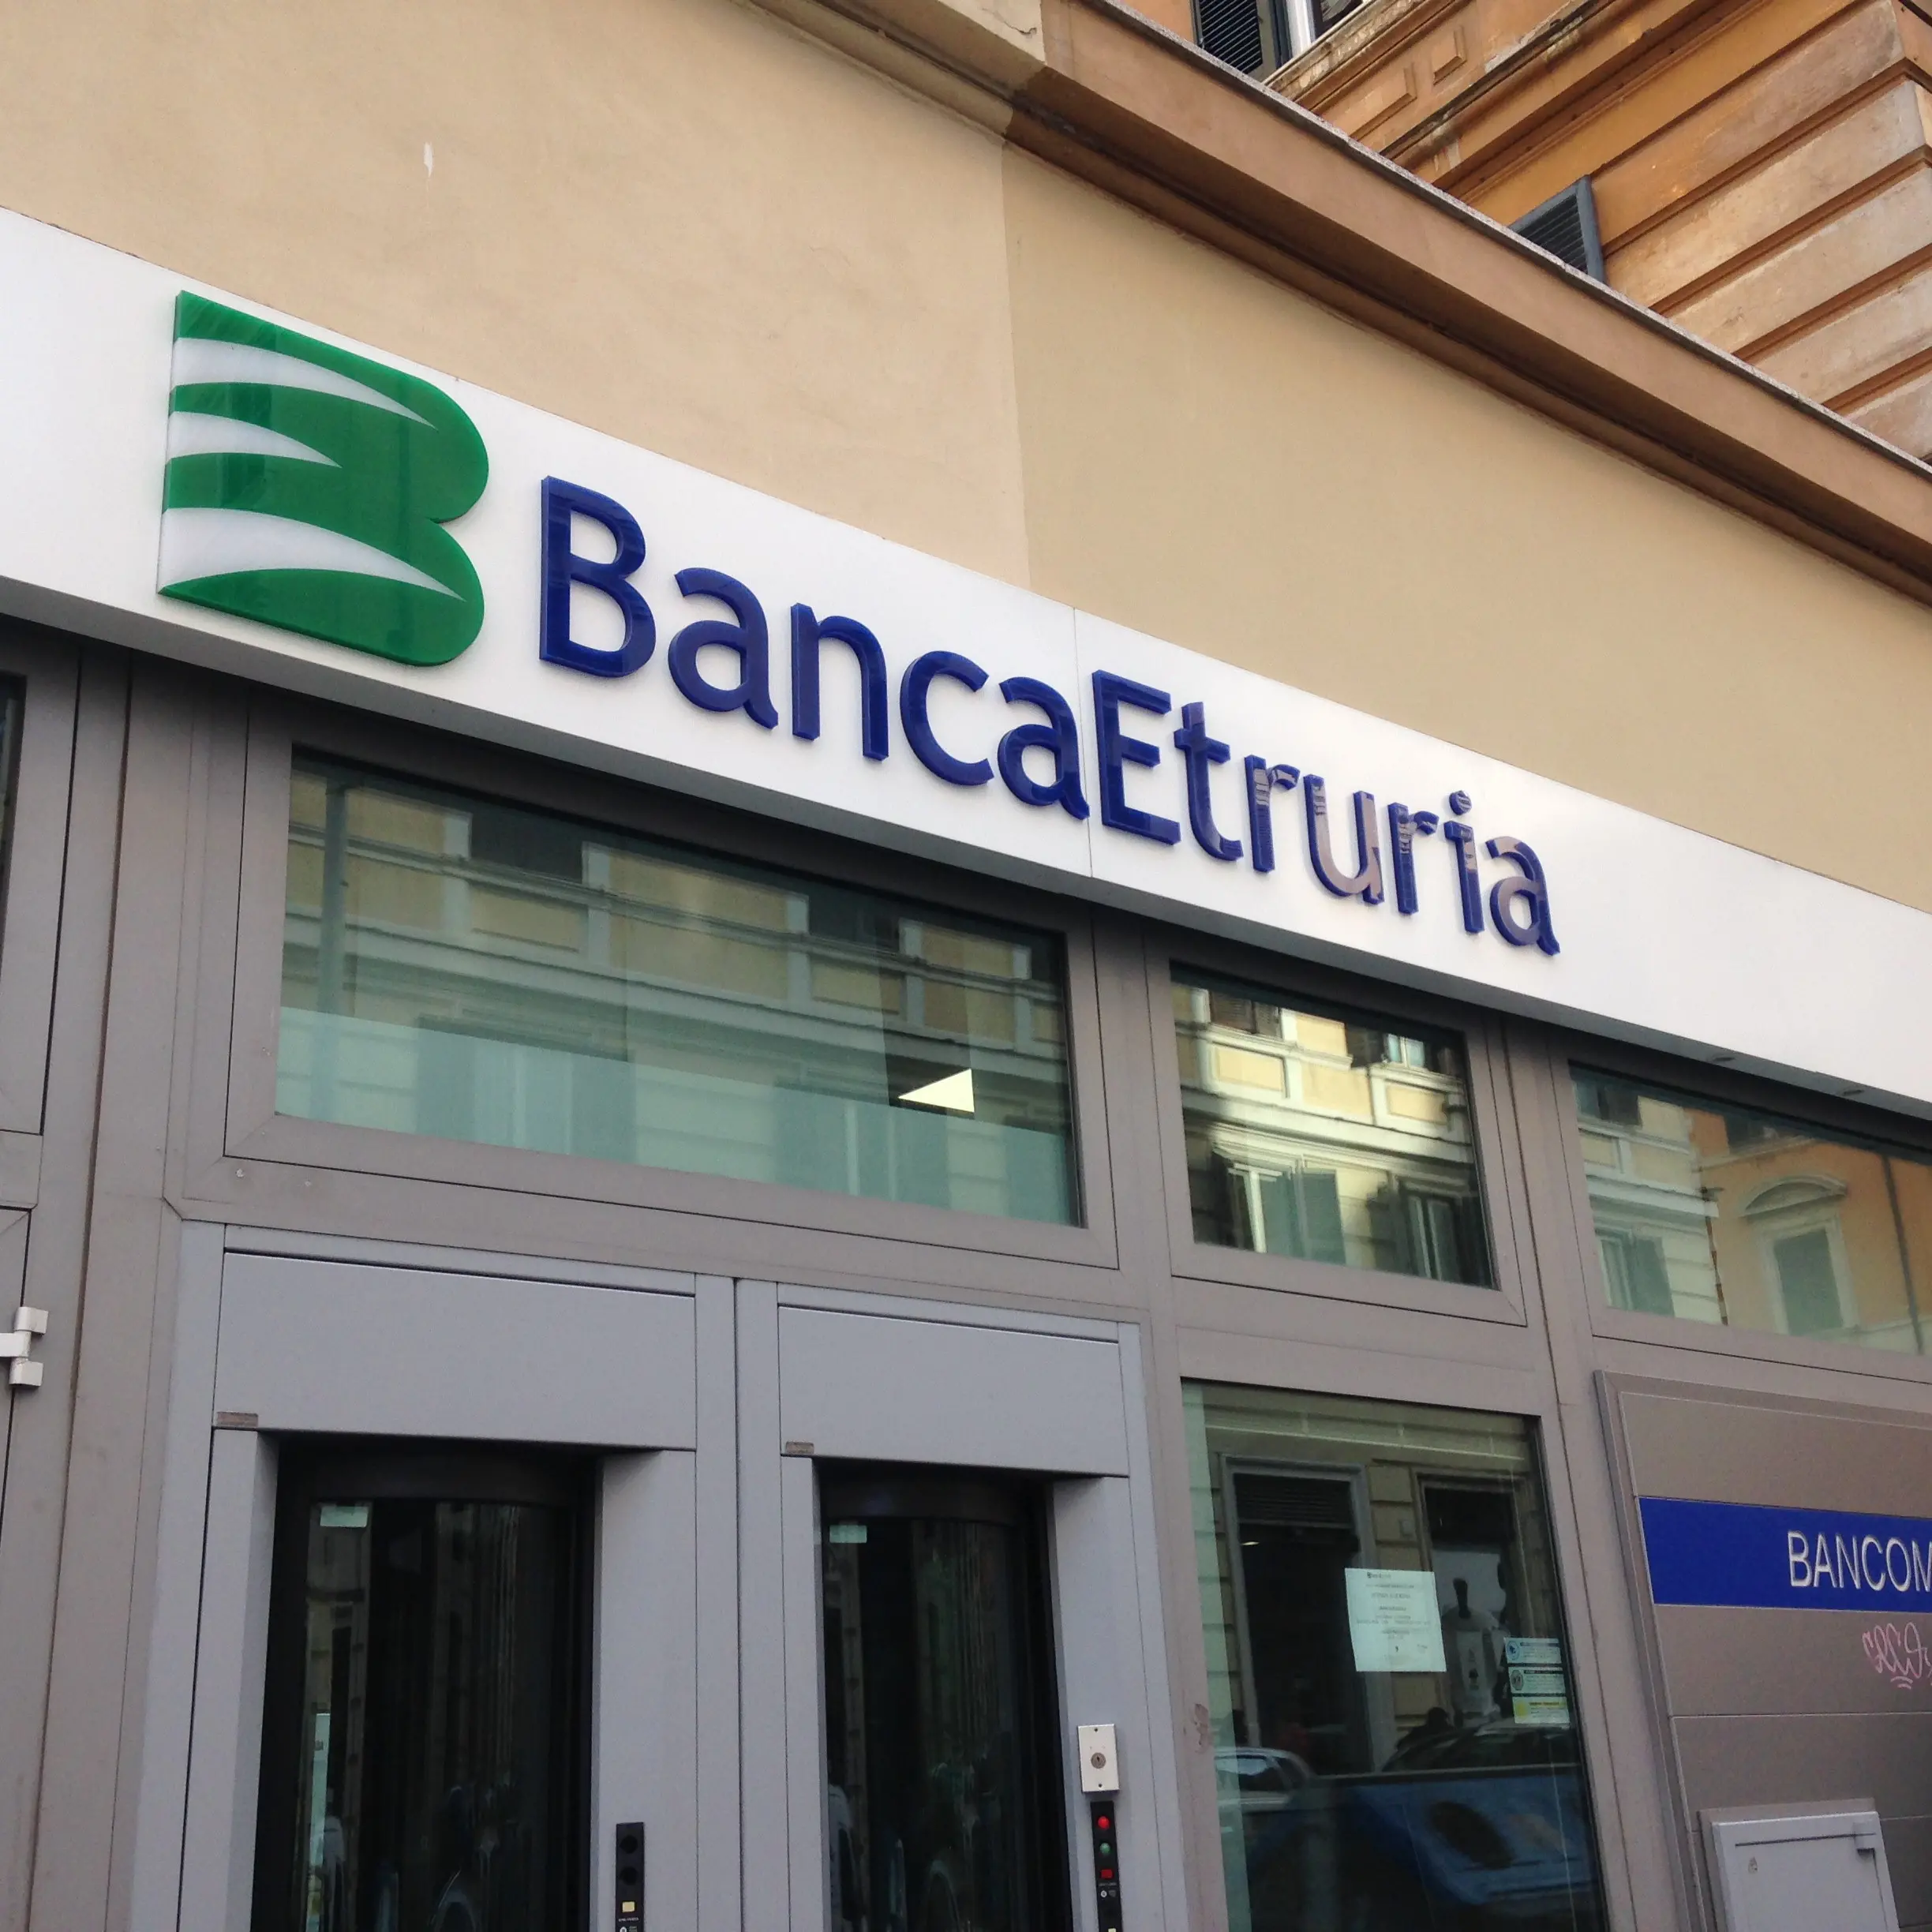 Banca Etruria, boom di adesioni all’azione legale di Federconsumatori